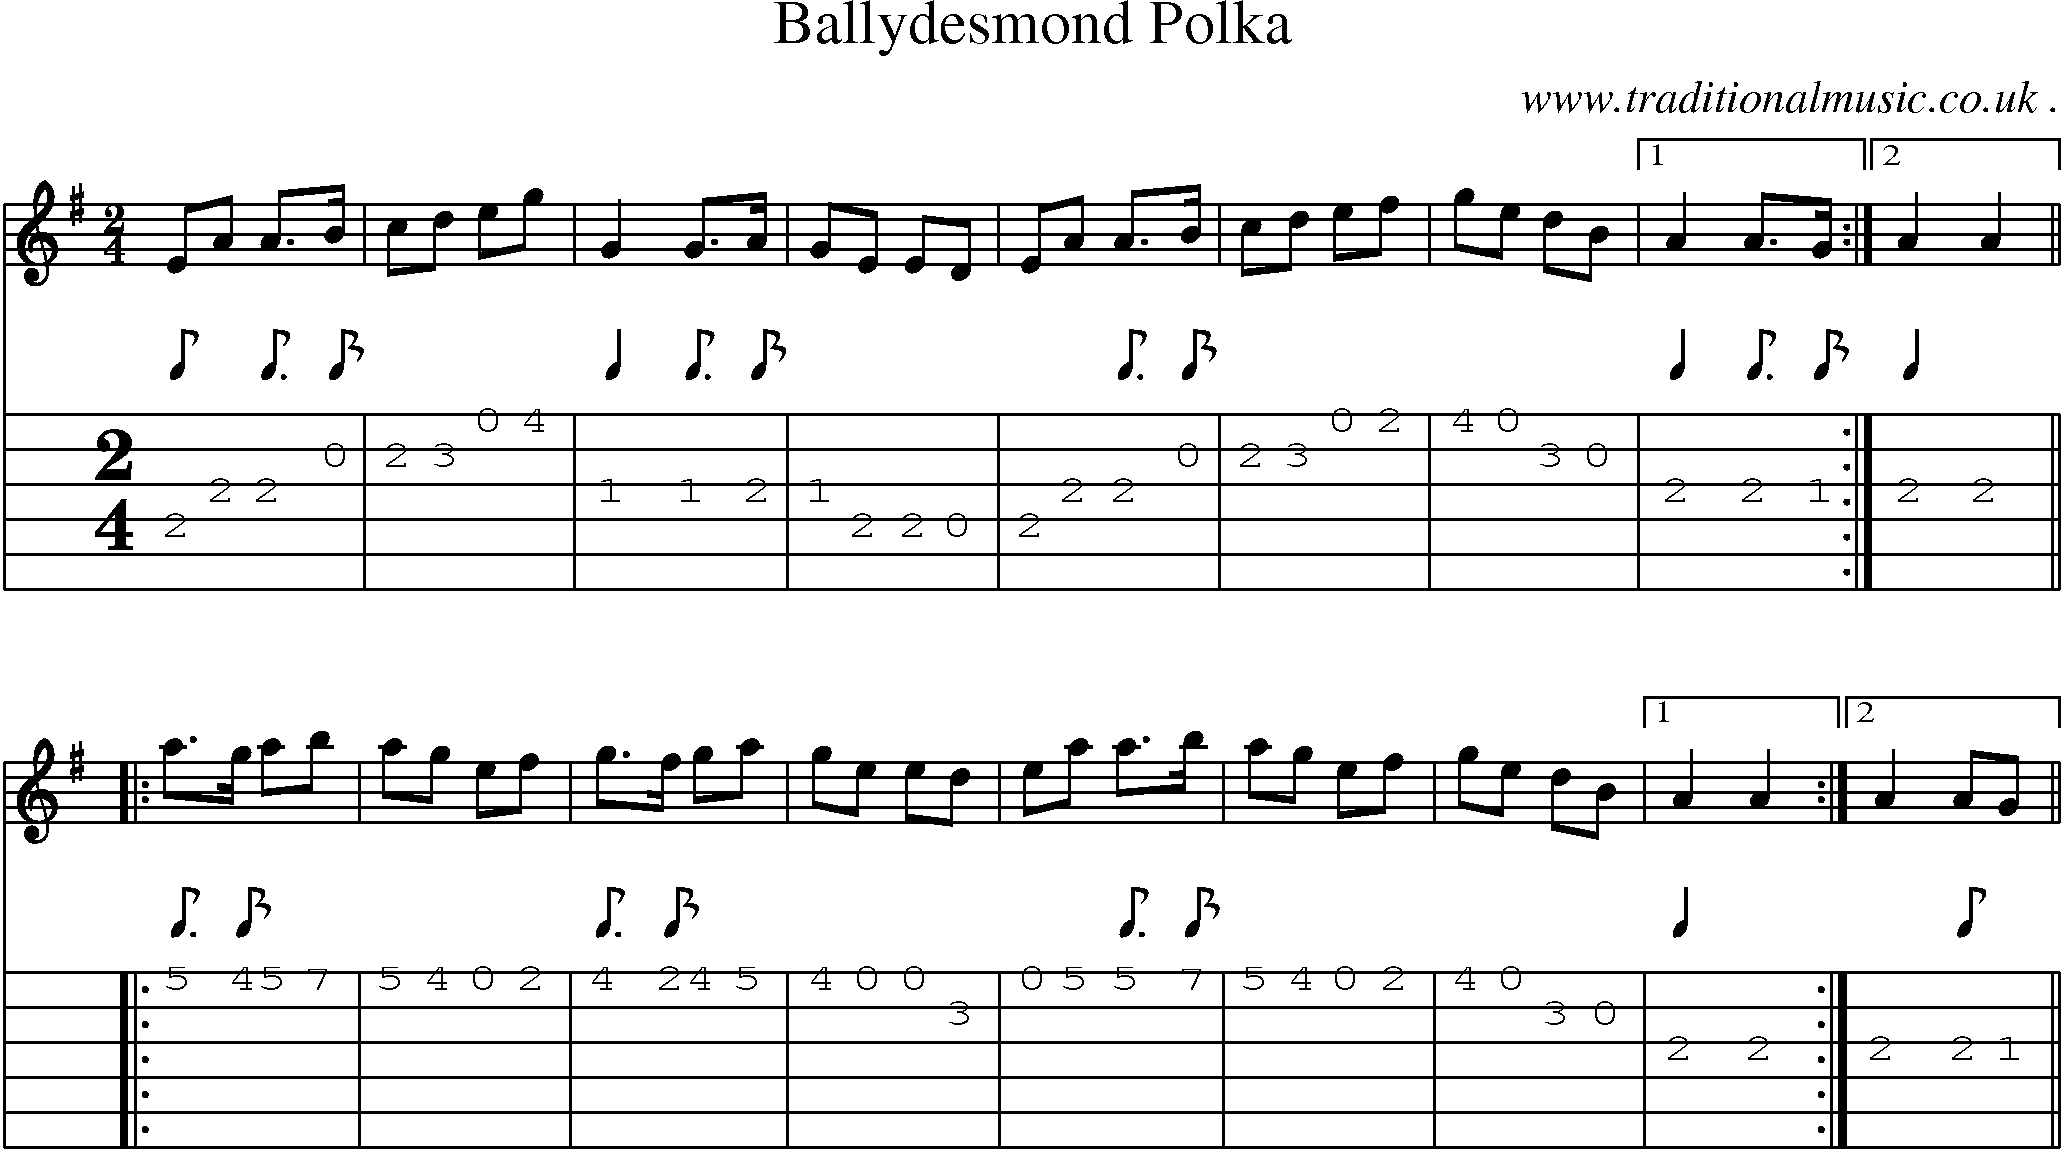 Sheet-Music and Guitar Tabs for Ballydesmond Polka